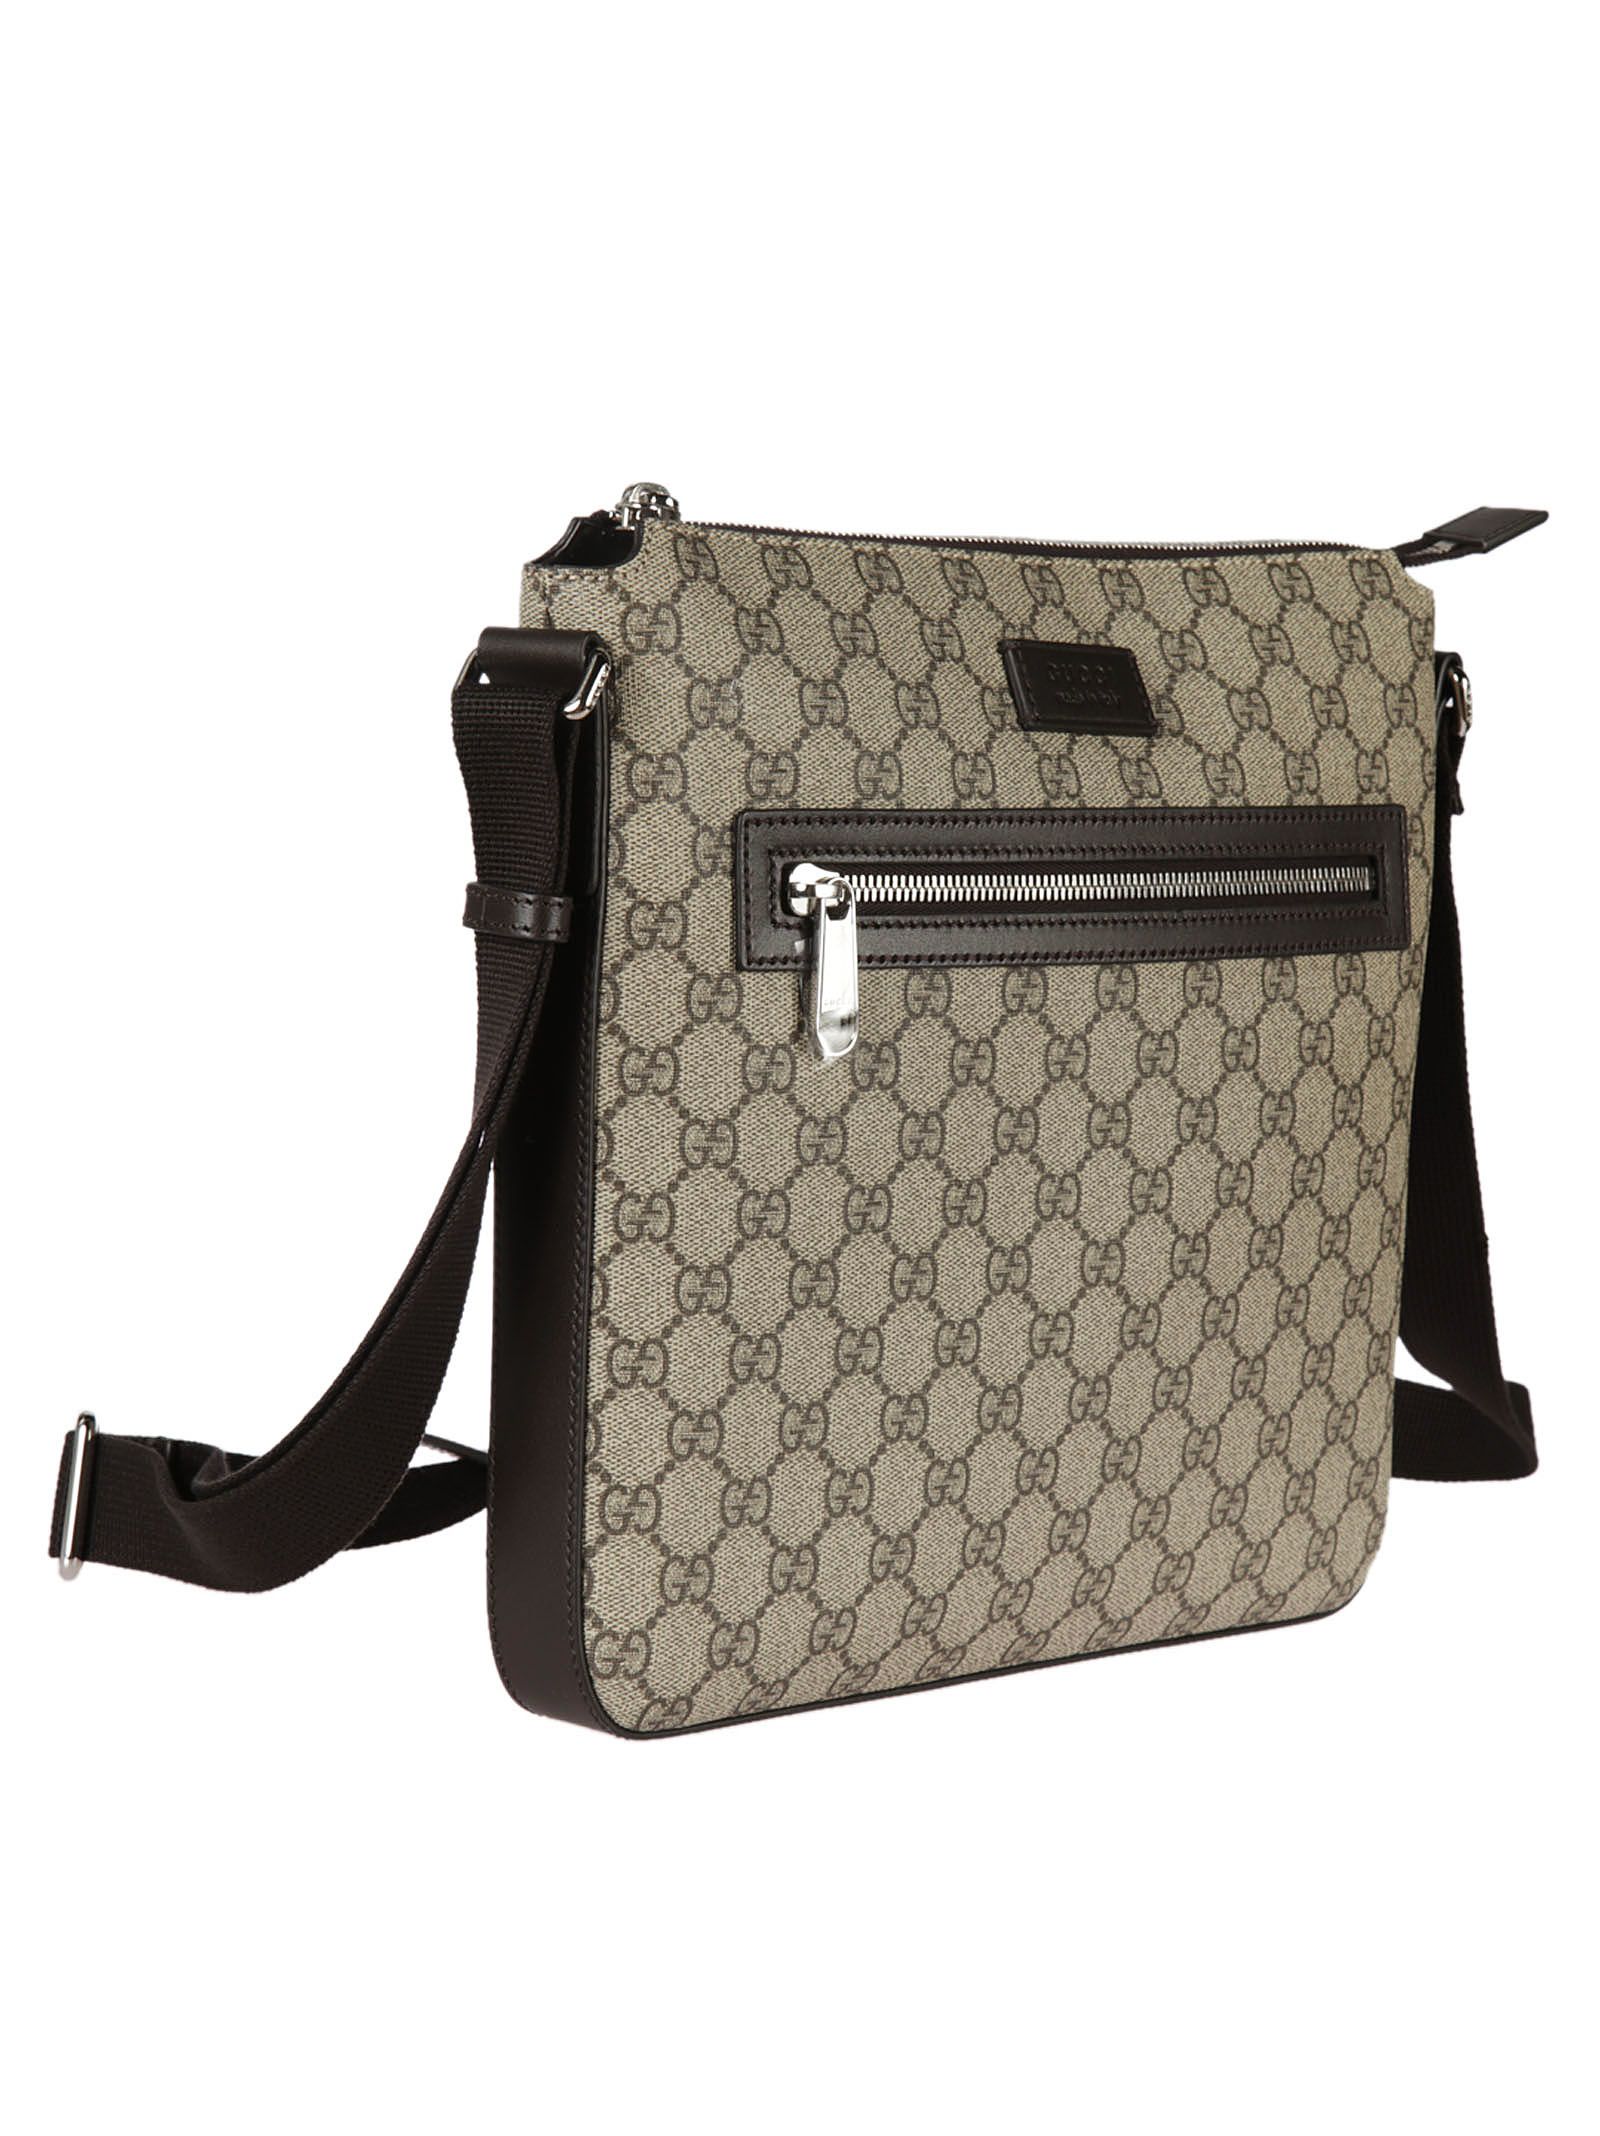 italist | Best price in the market for Gucci Gucci Supreme Shoulder Bag - Beige - 9496885 | italist